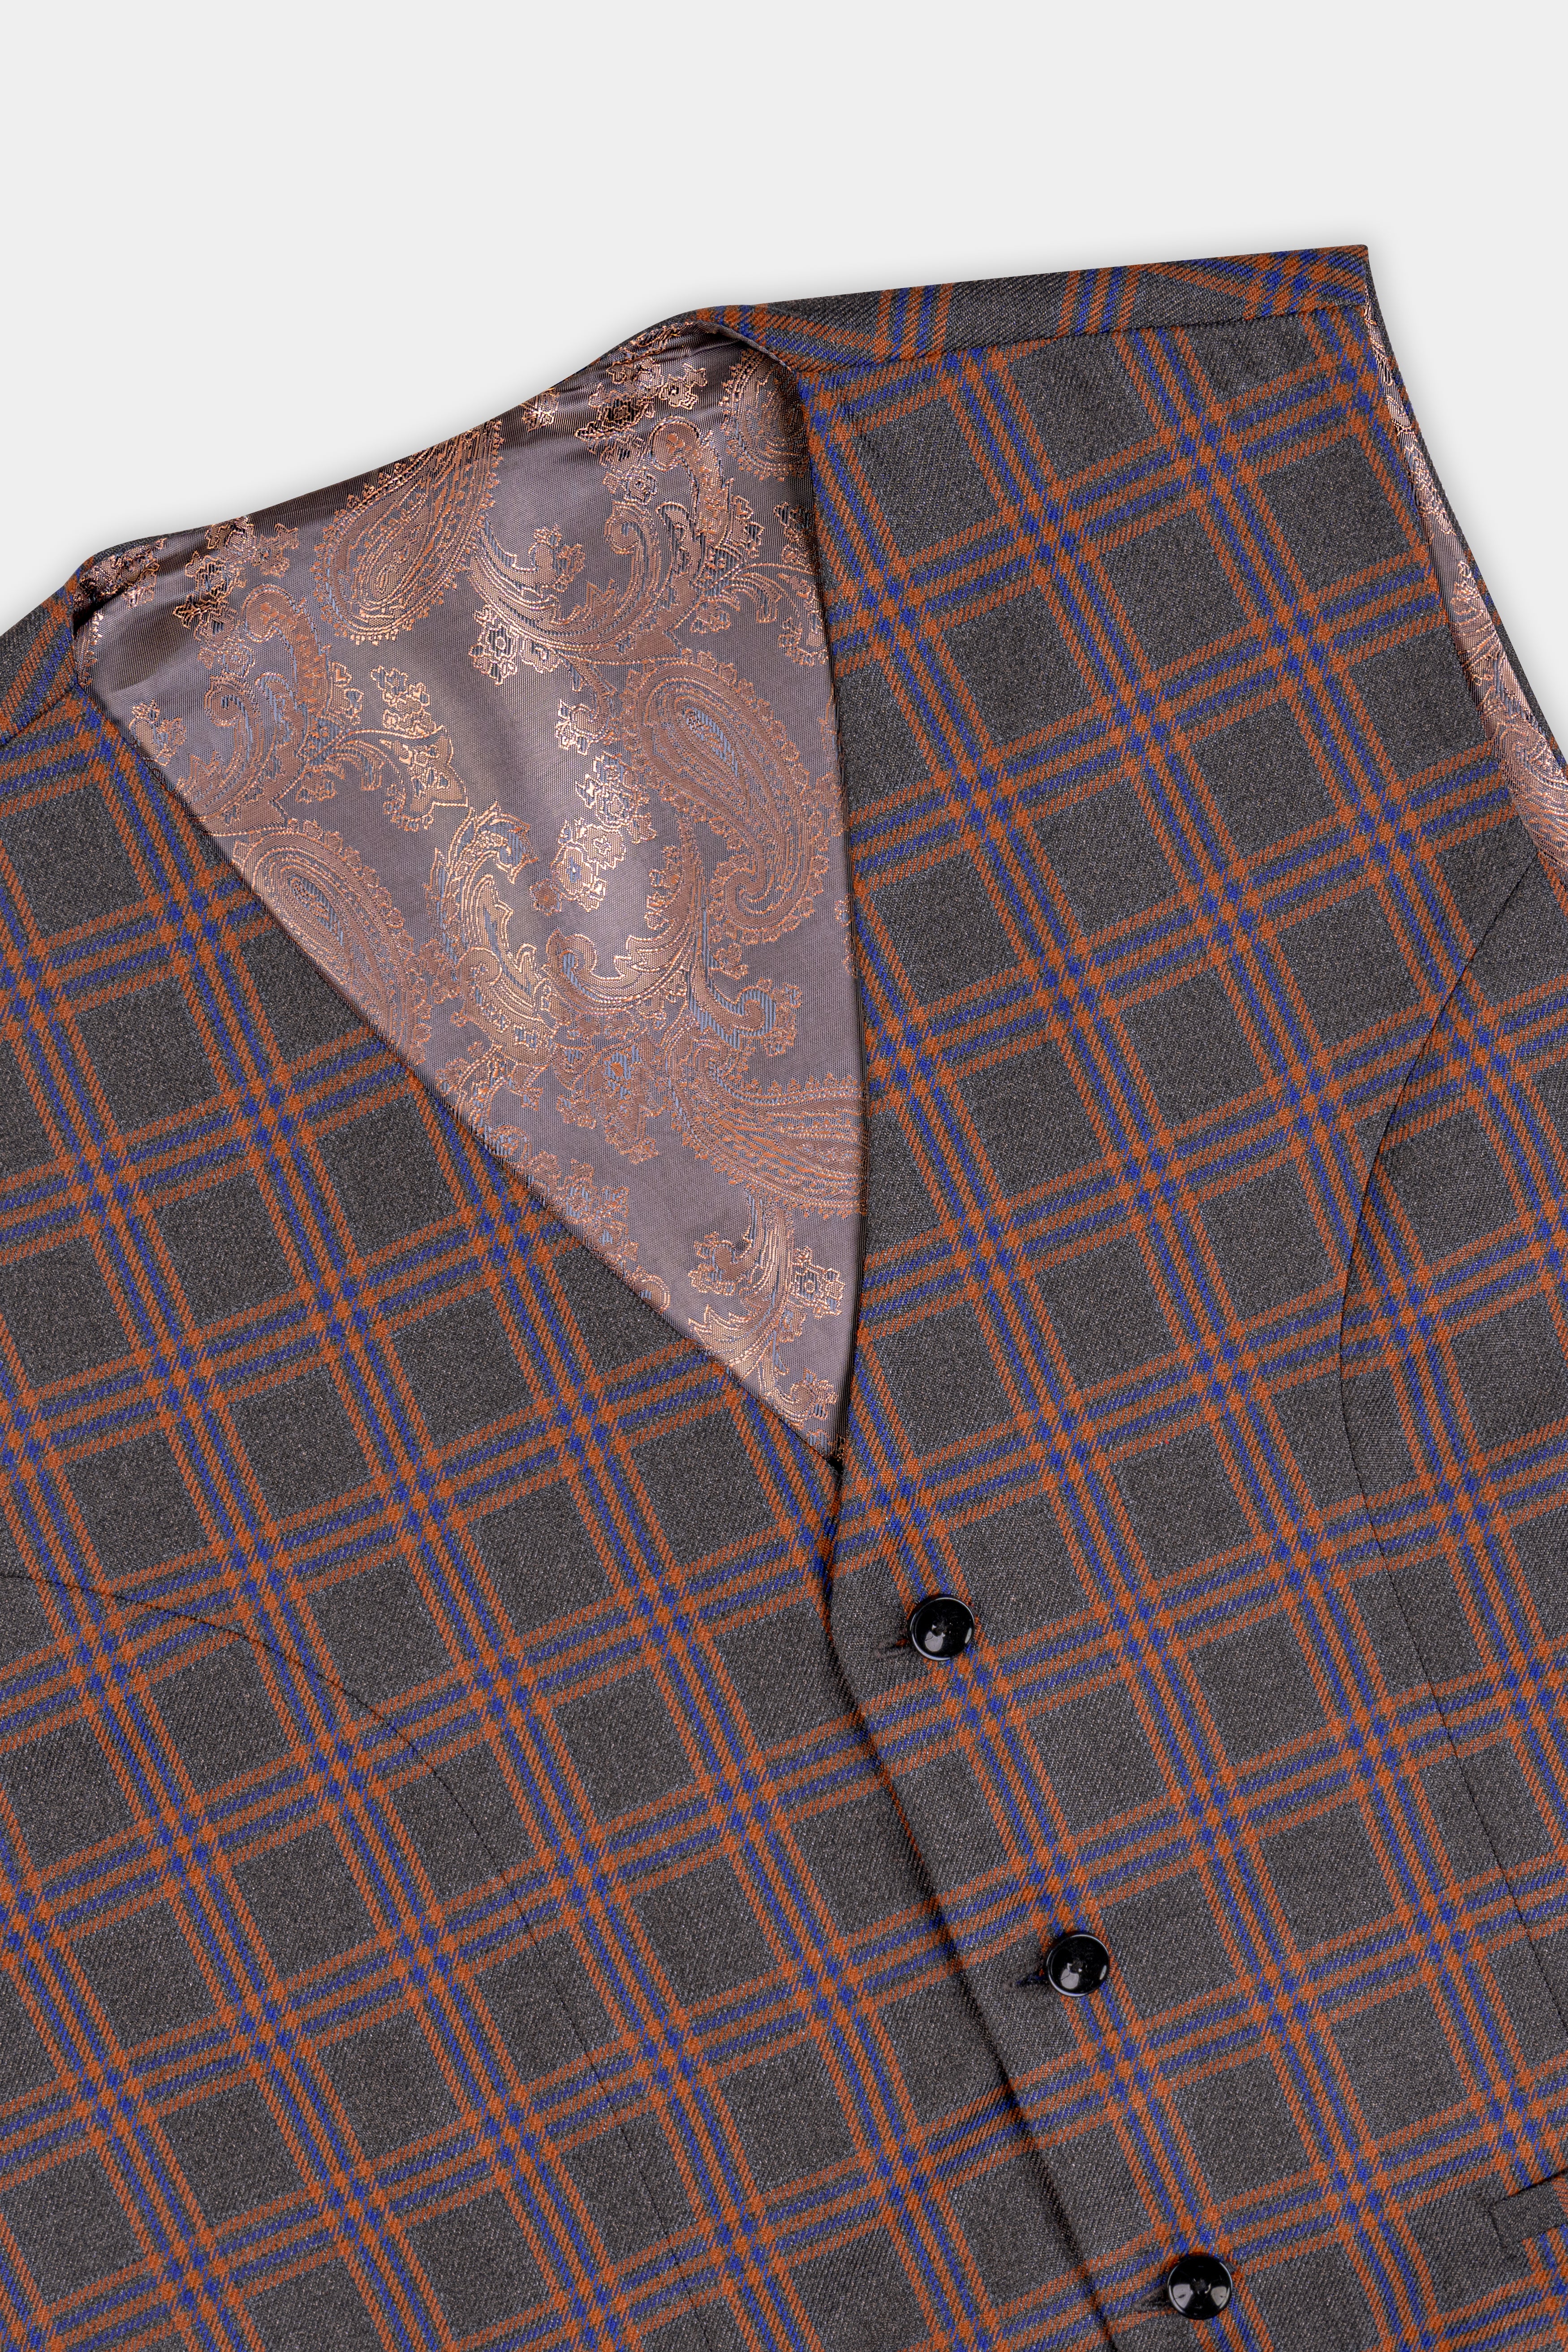 Emperor Gray and Russet Brown Plaid Tweed Waistcoat